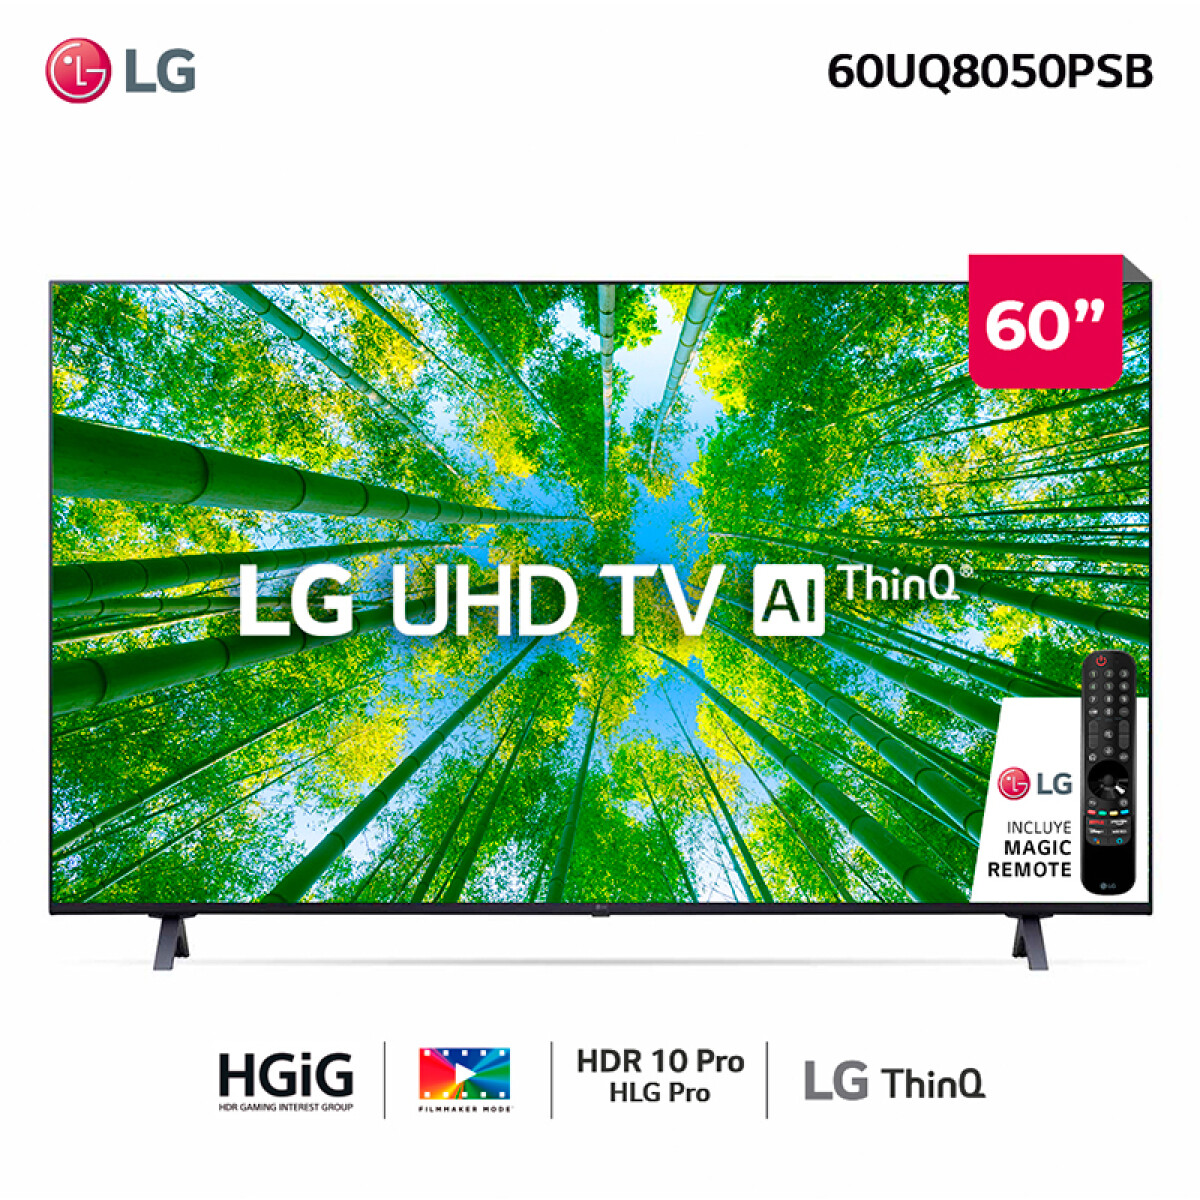 Tv LG UHD 4K 60" 60UQ8050PSB Al Smart TV - Unica 